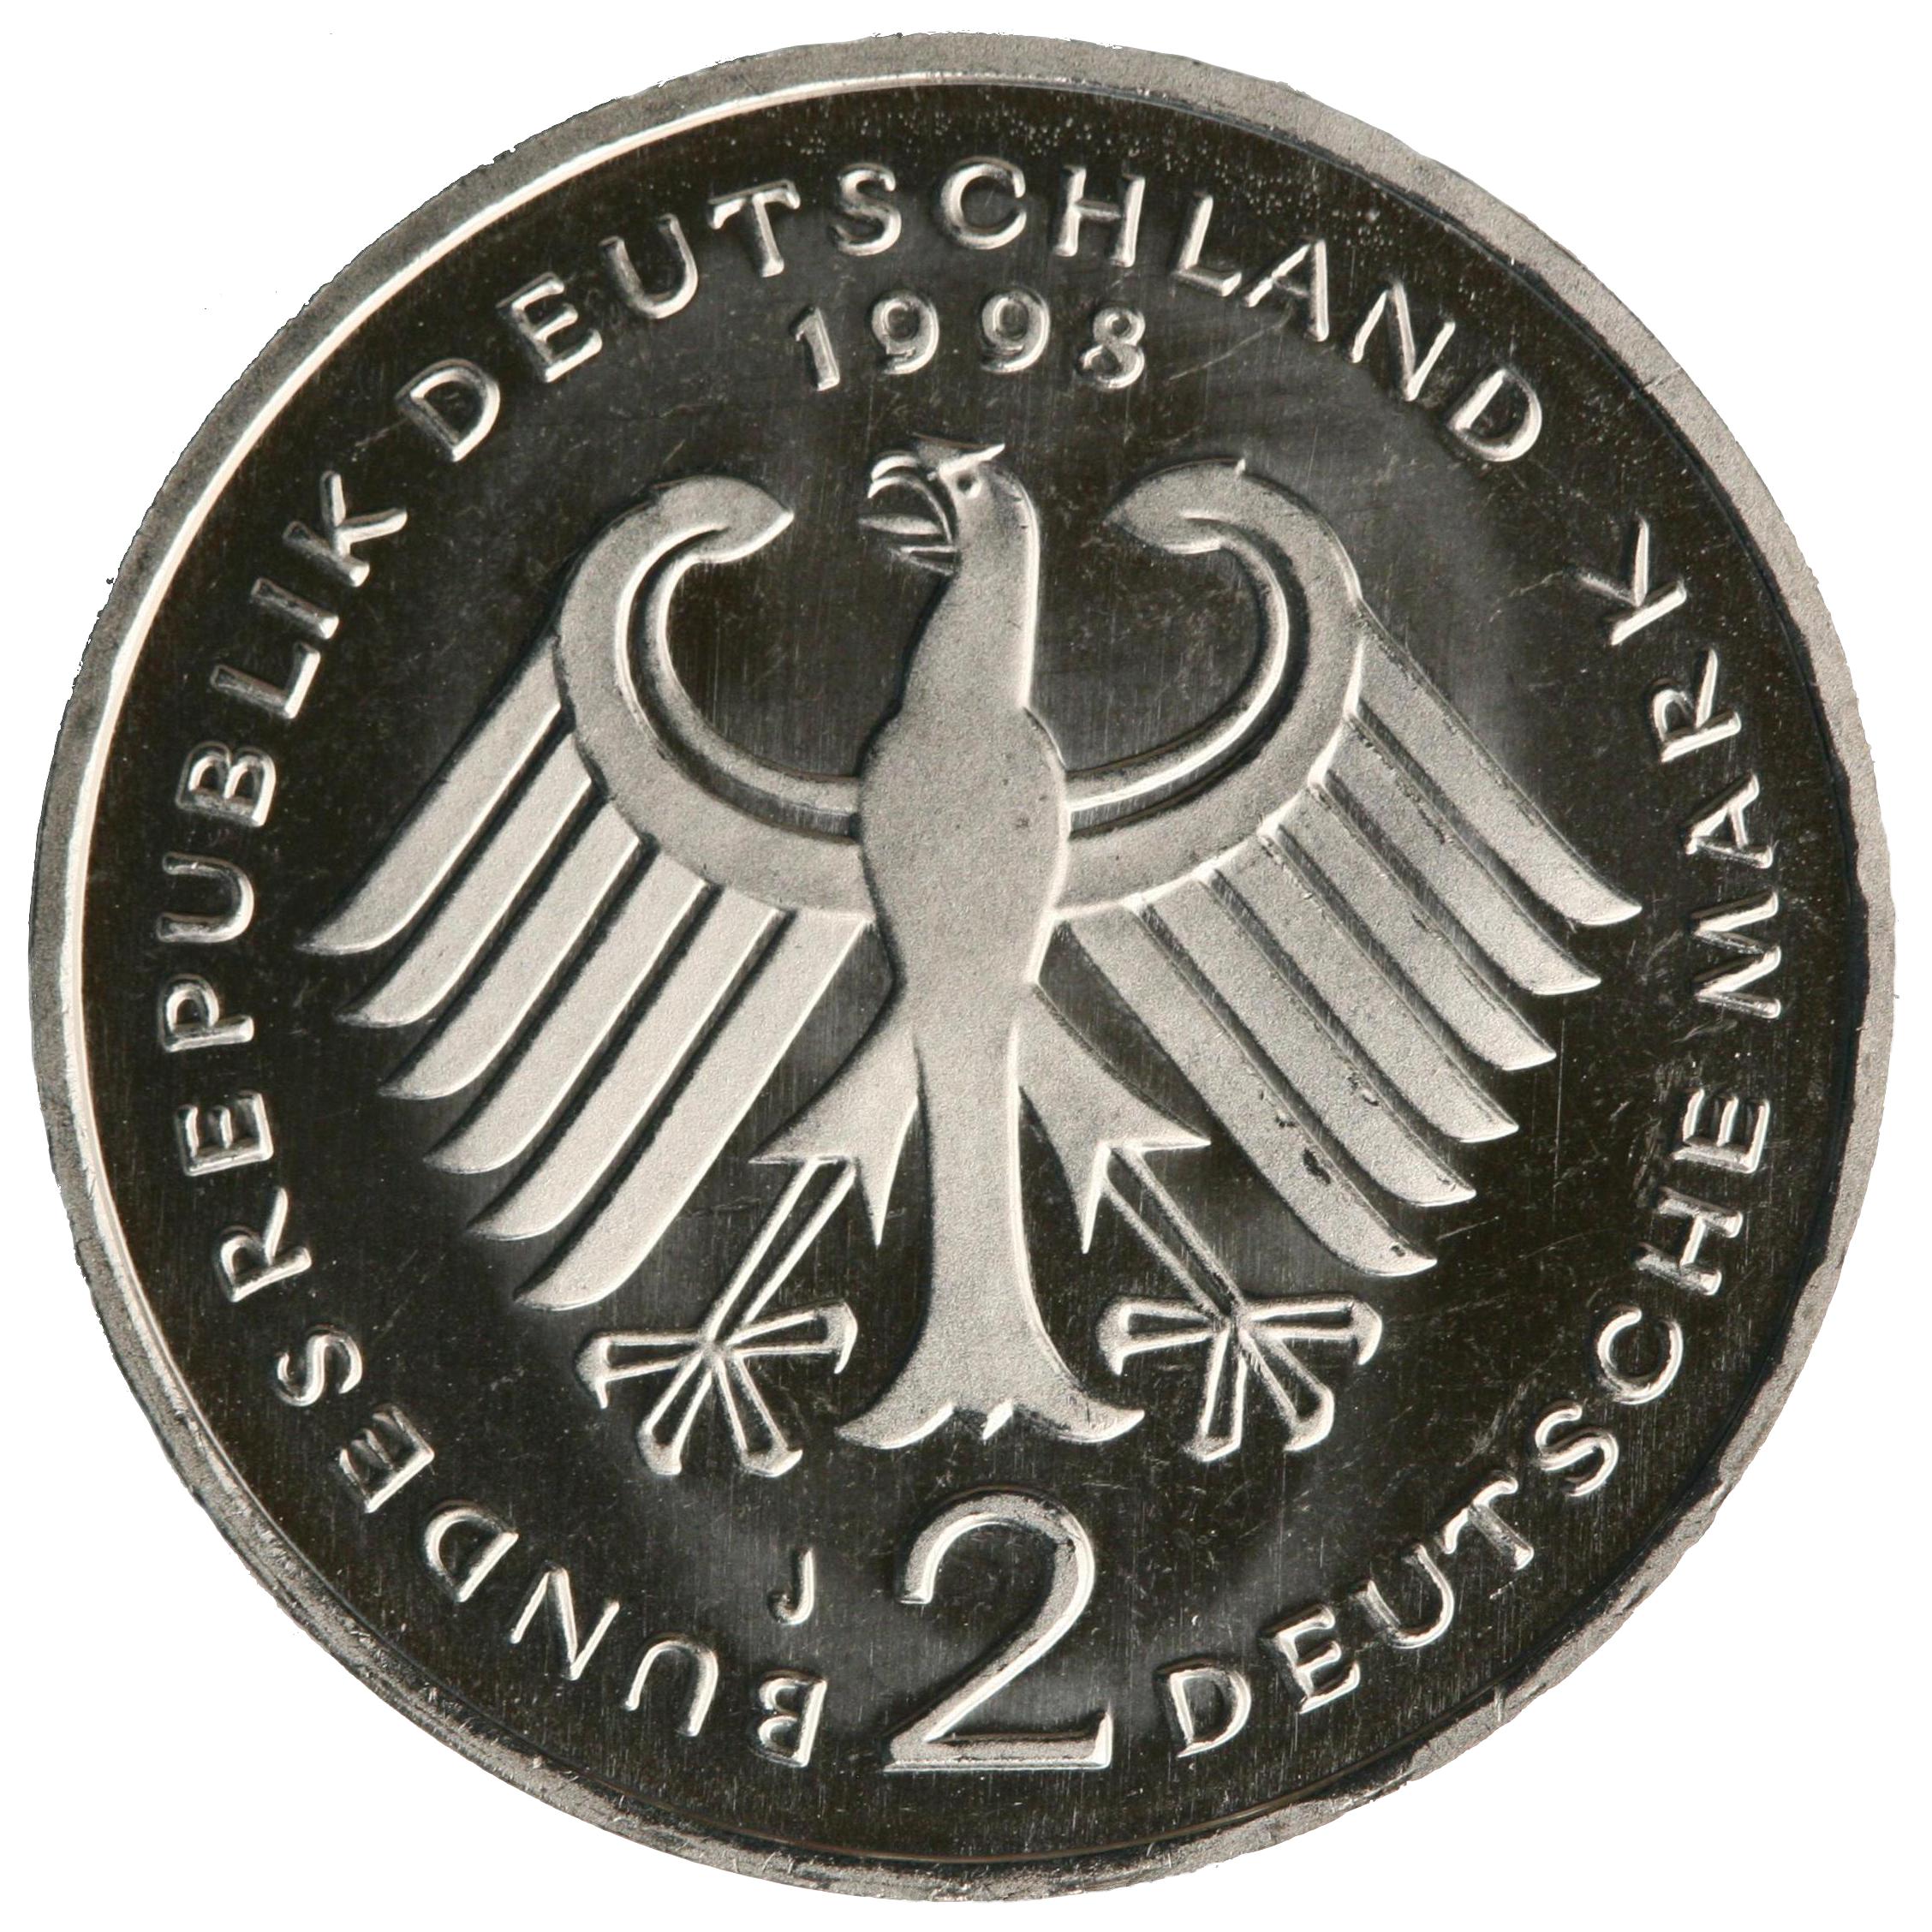 2-DM coin Brandt - reverse